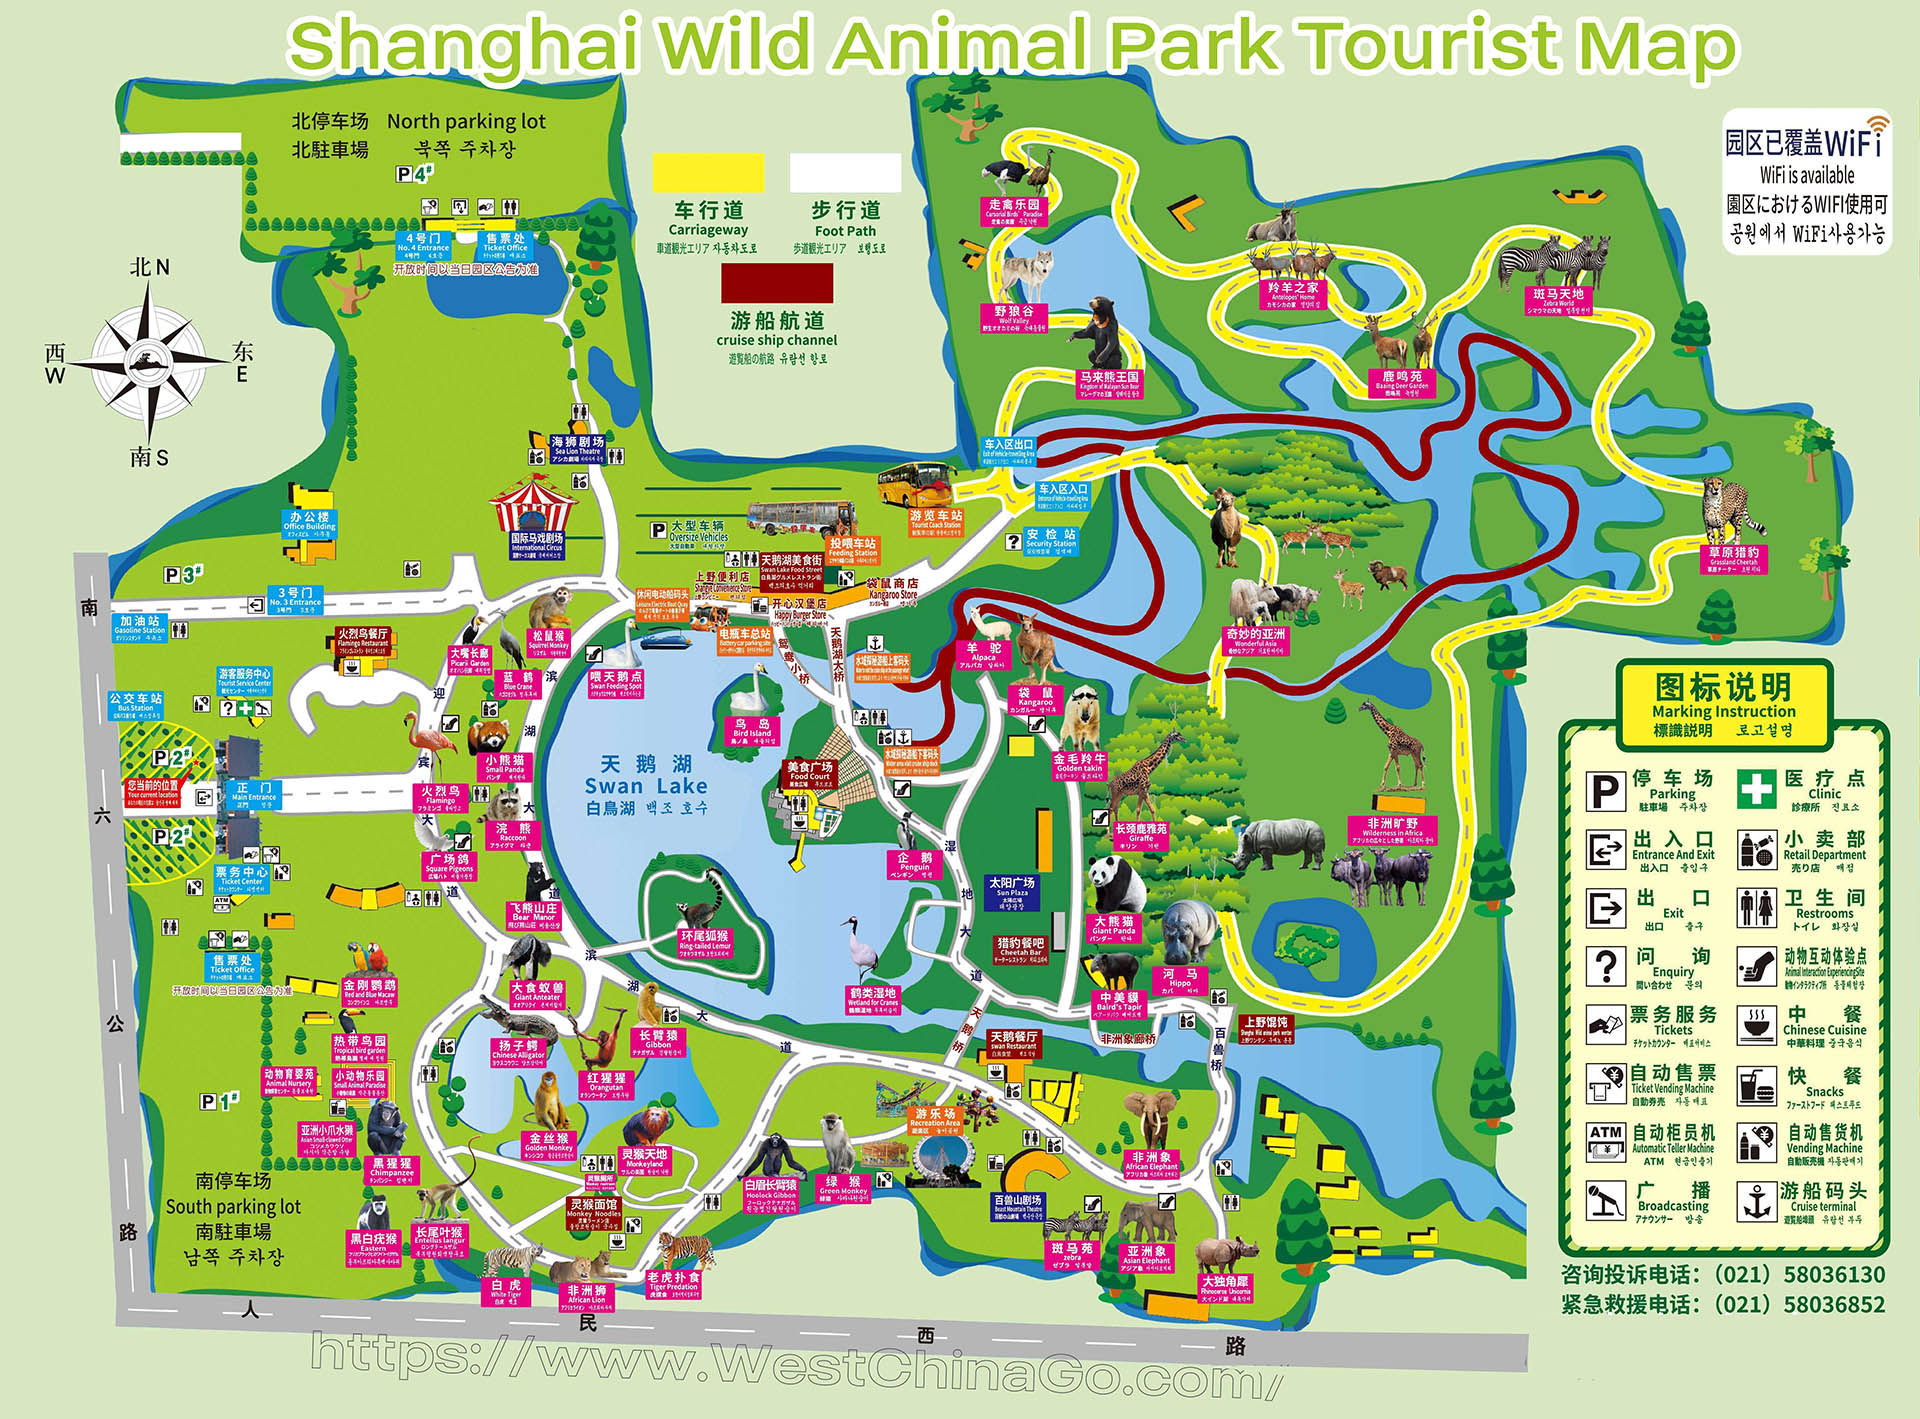 Shanghai Wild Animal Park Tourist Map 